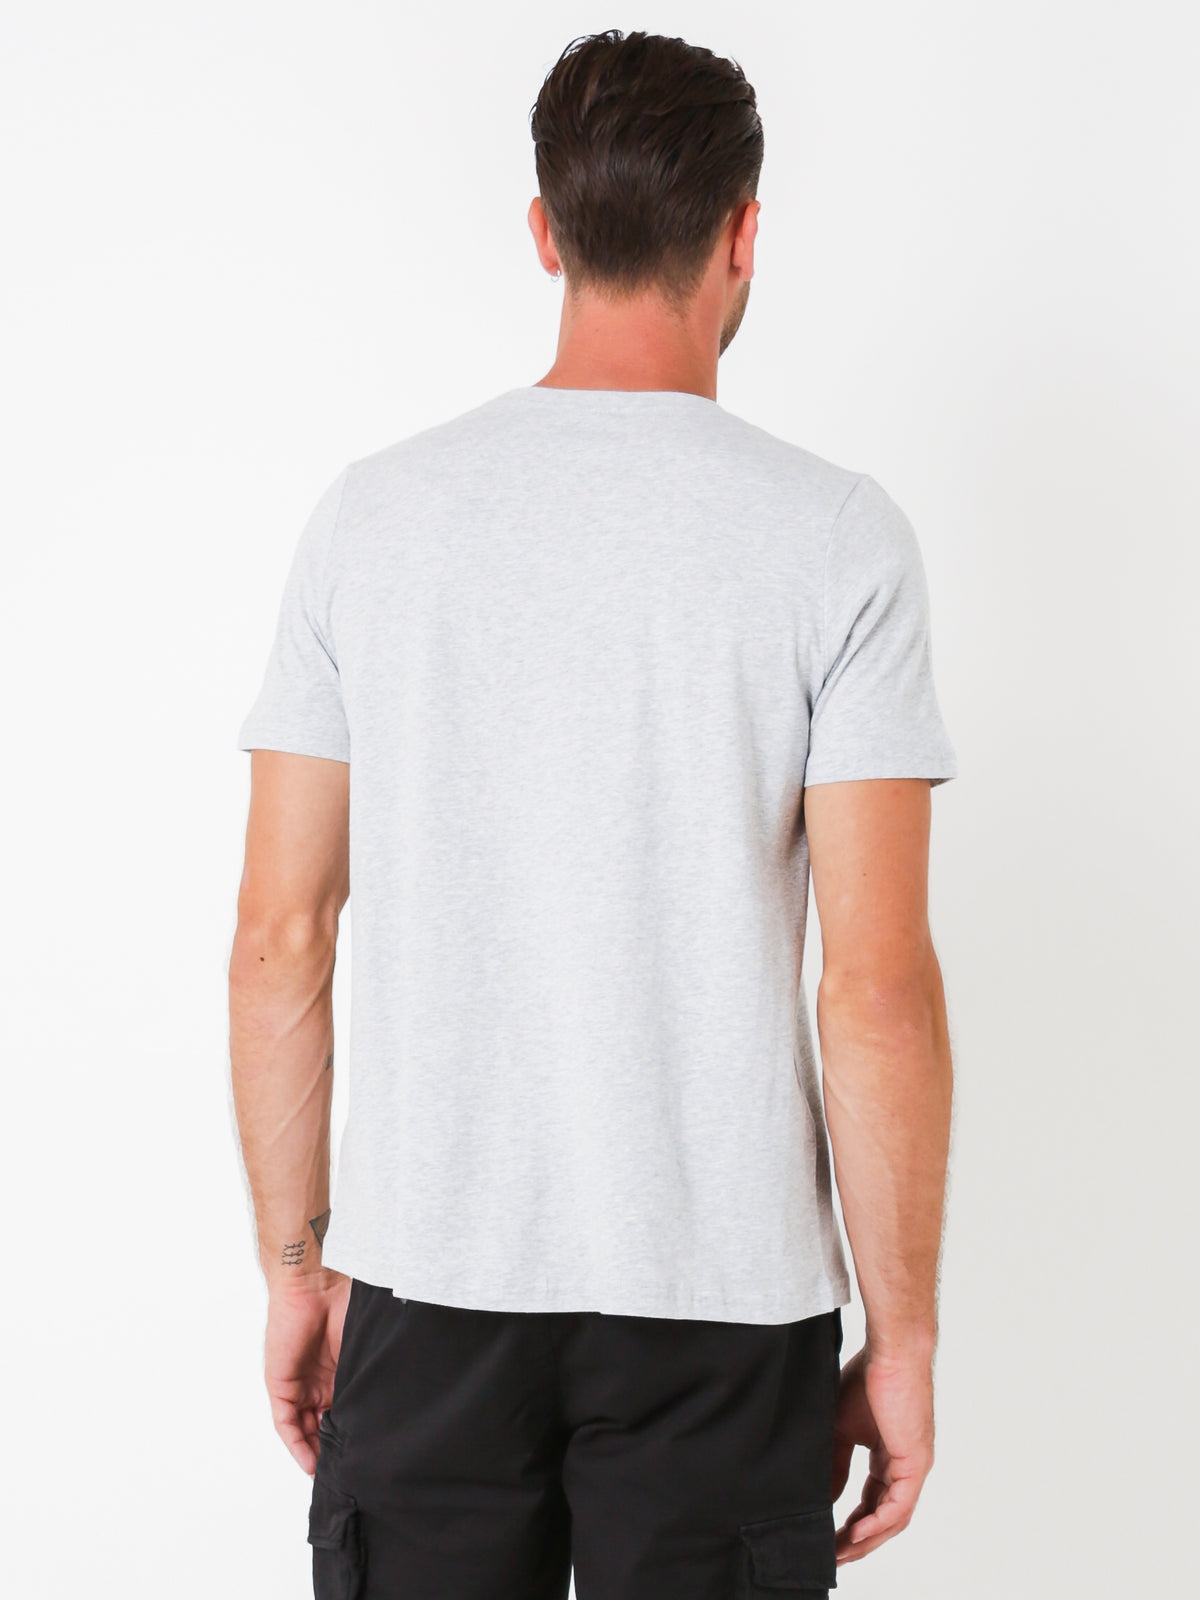 Myrtle T-Shirt in Grey Marle